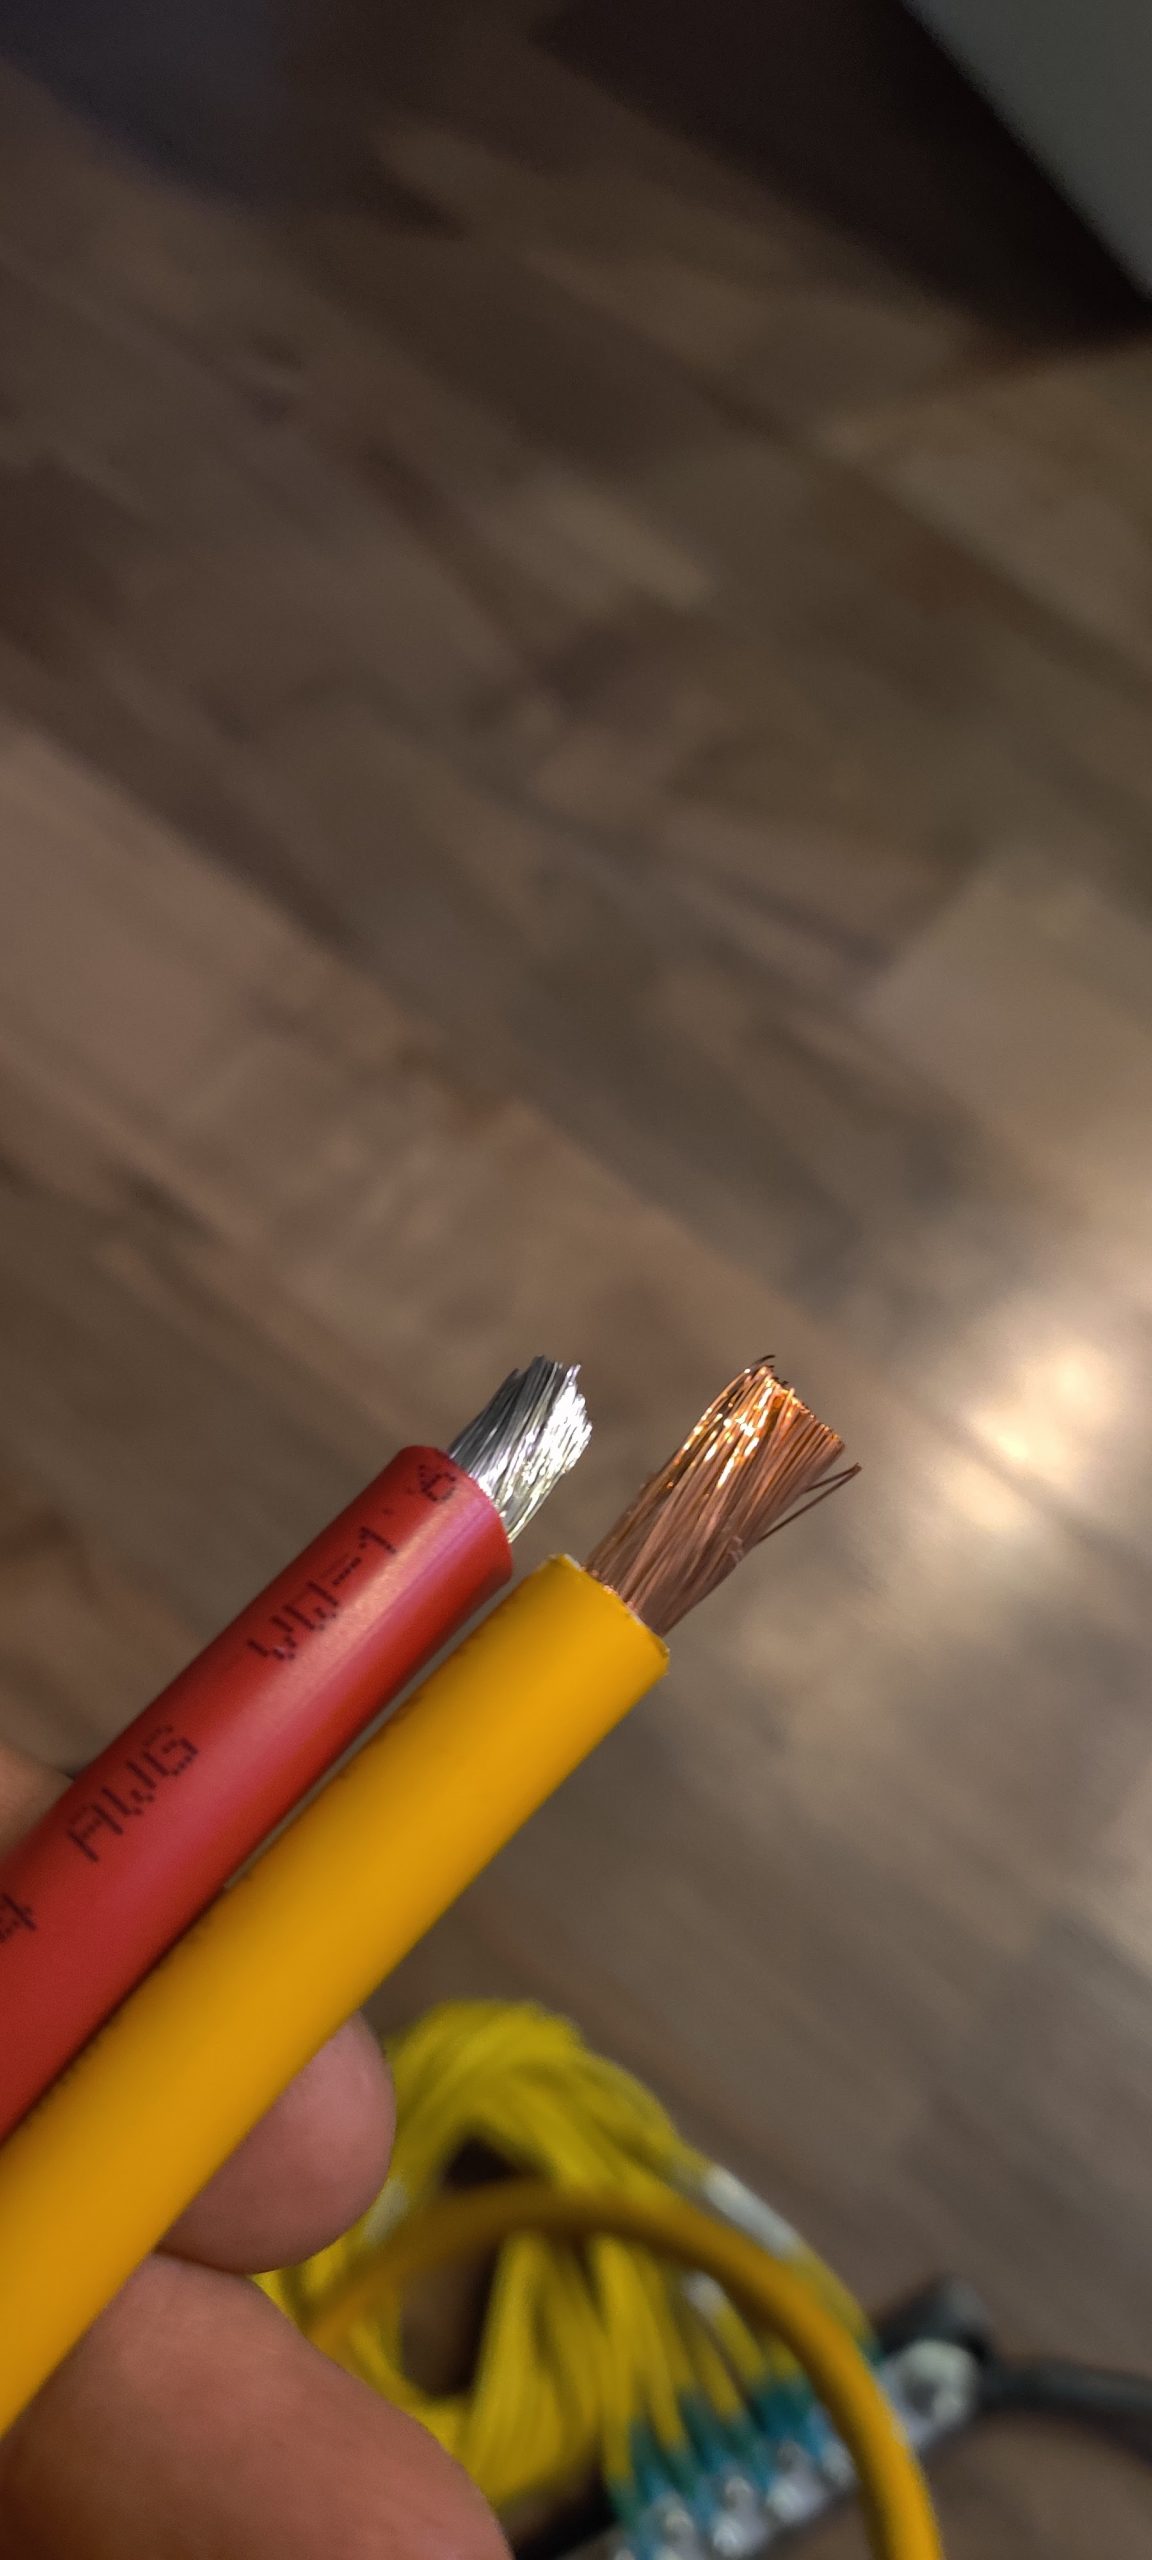 Bilge wiring and conduit